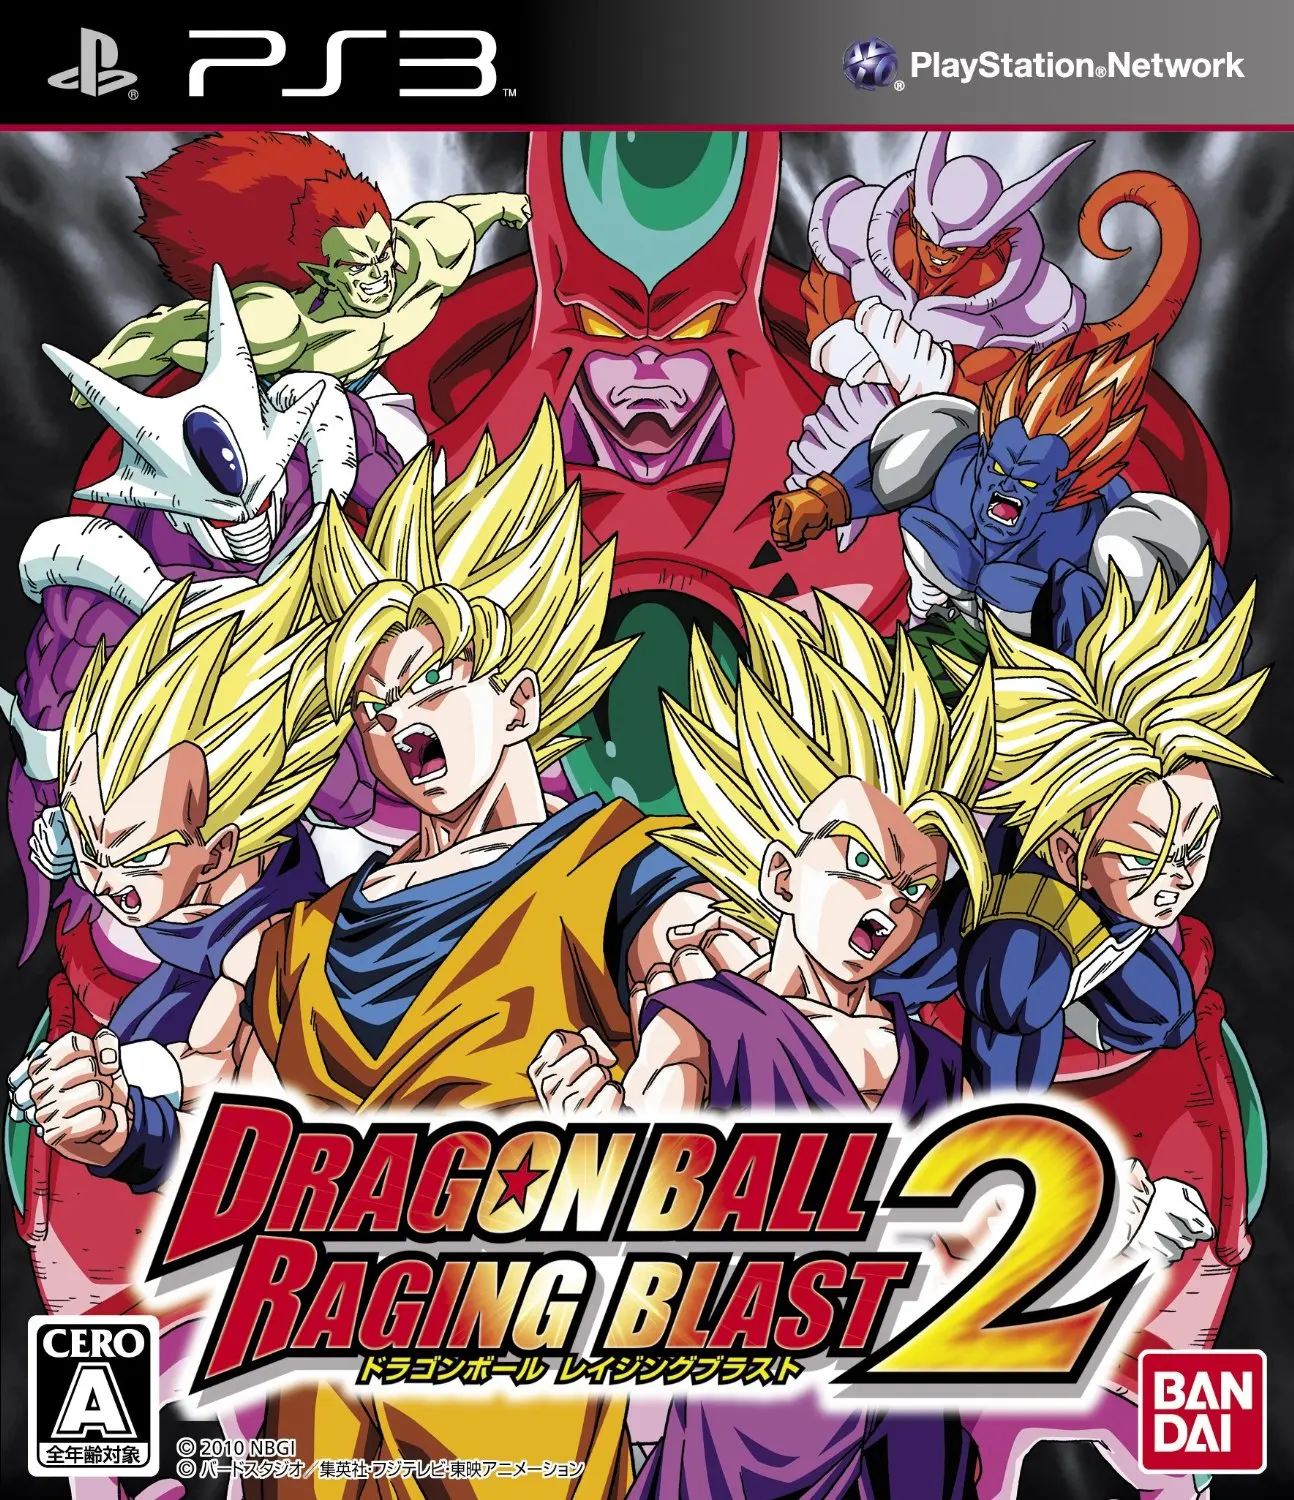 download for dragon ball raging blast 2 pc